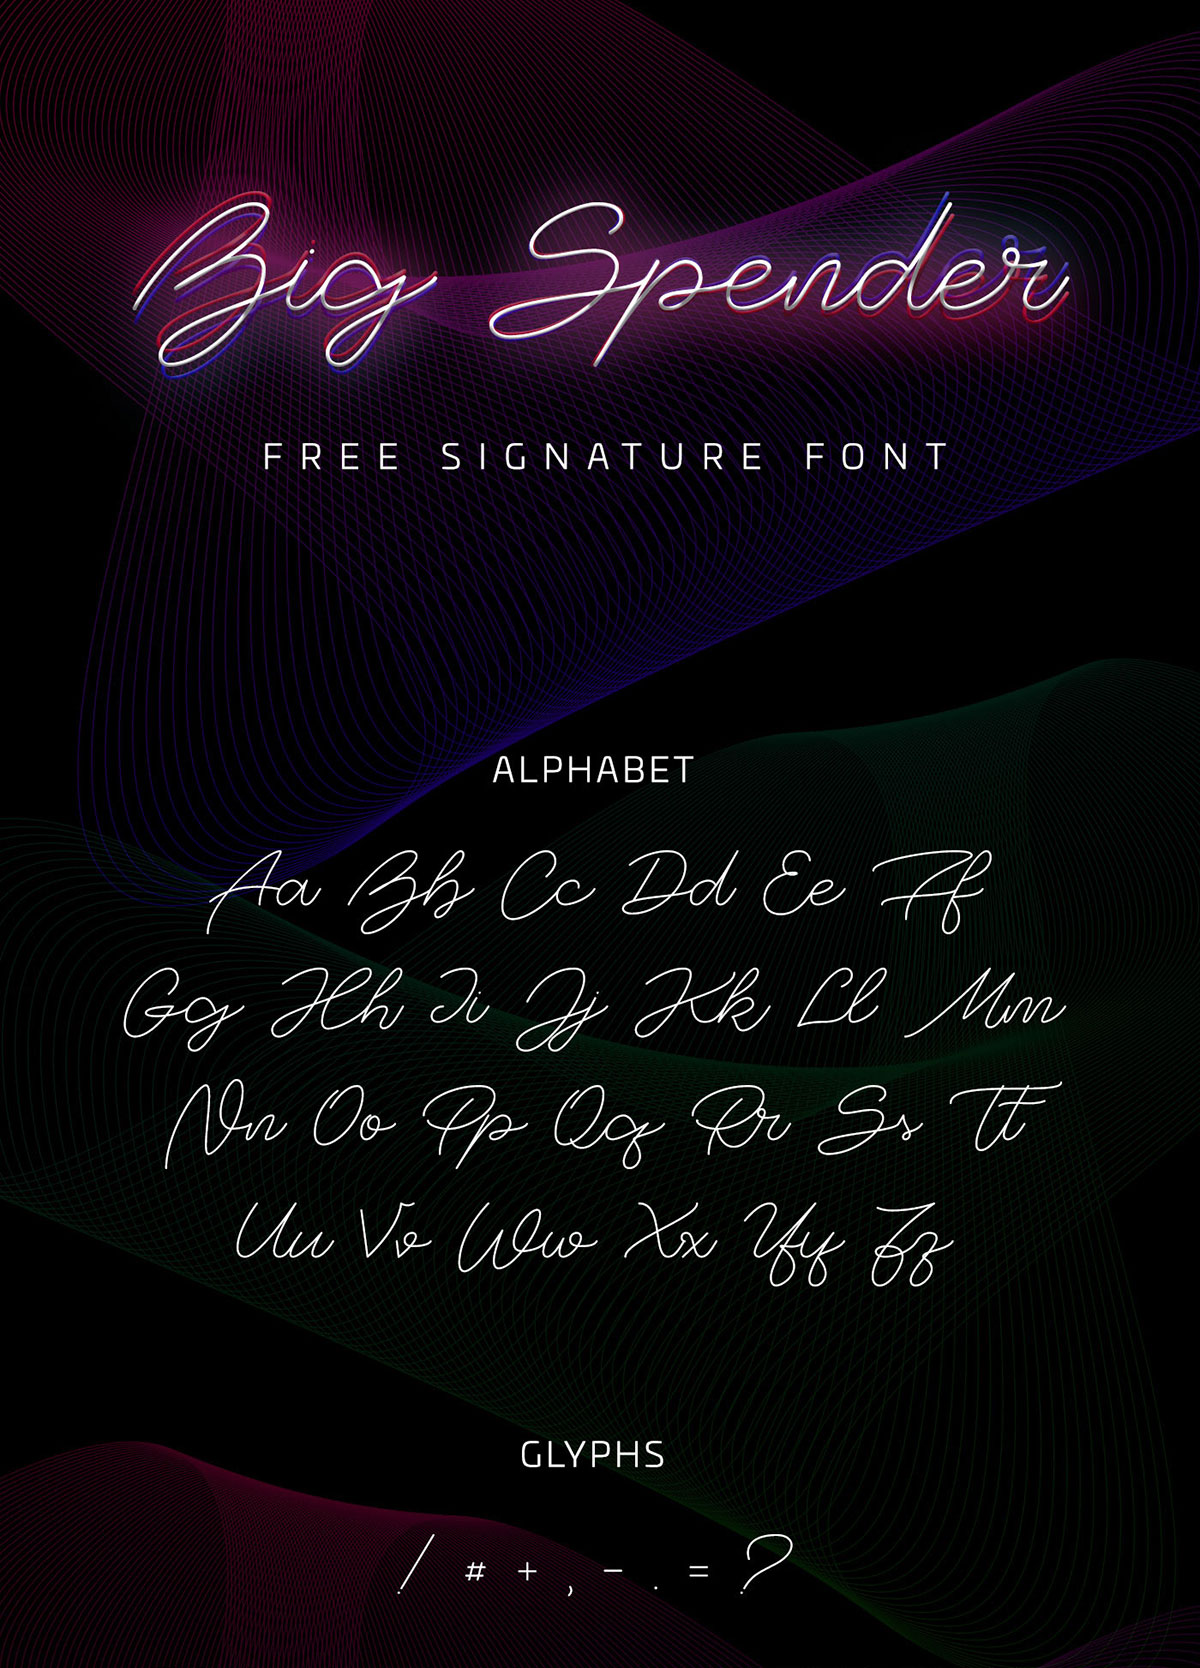 Free Big Spender Signature Font